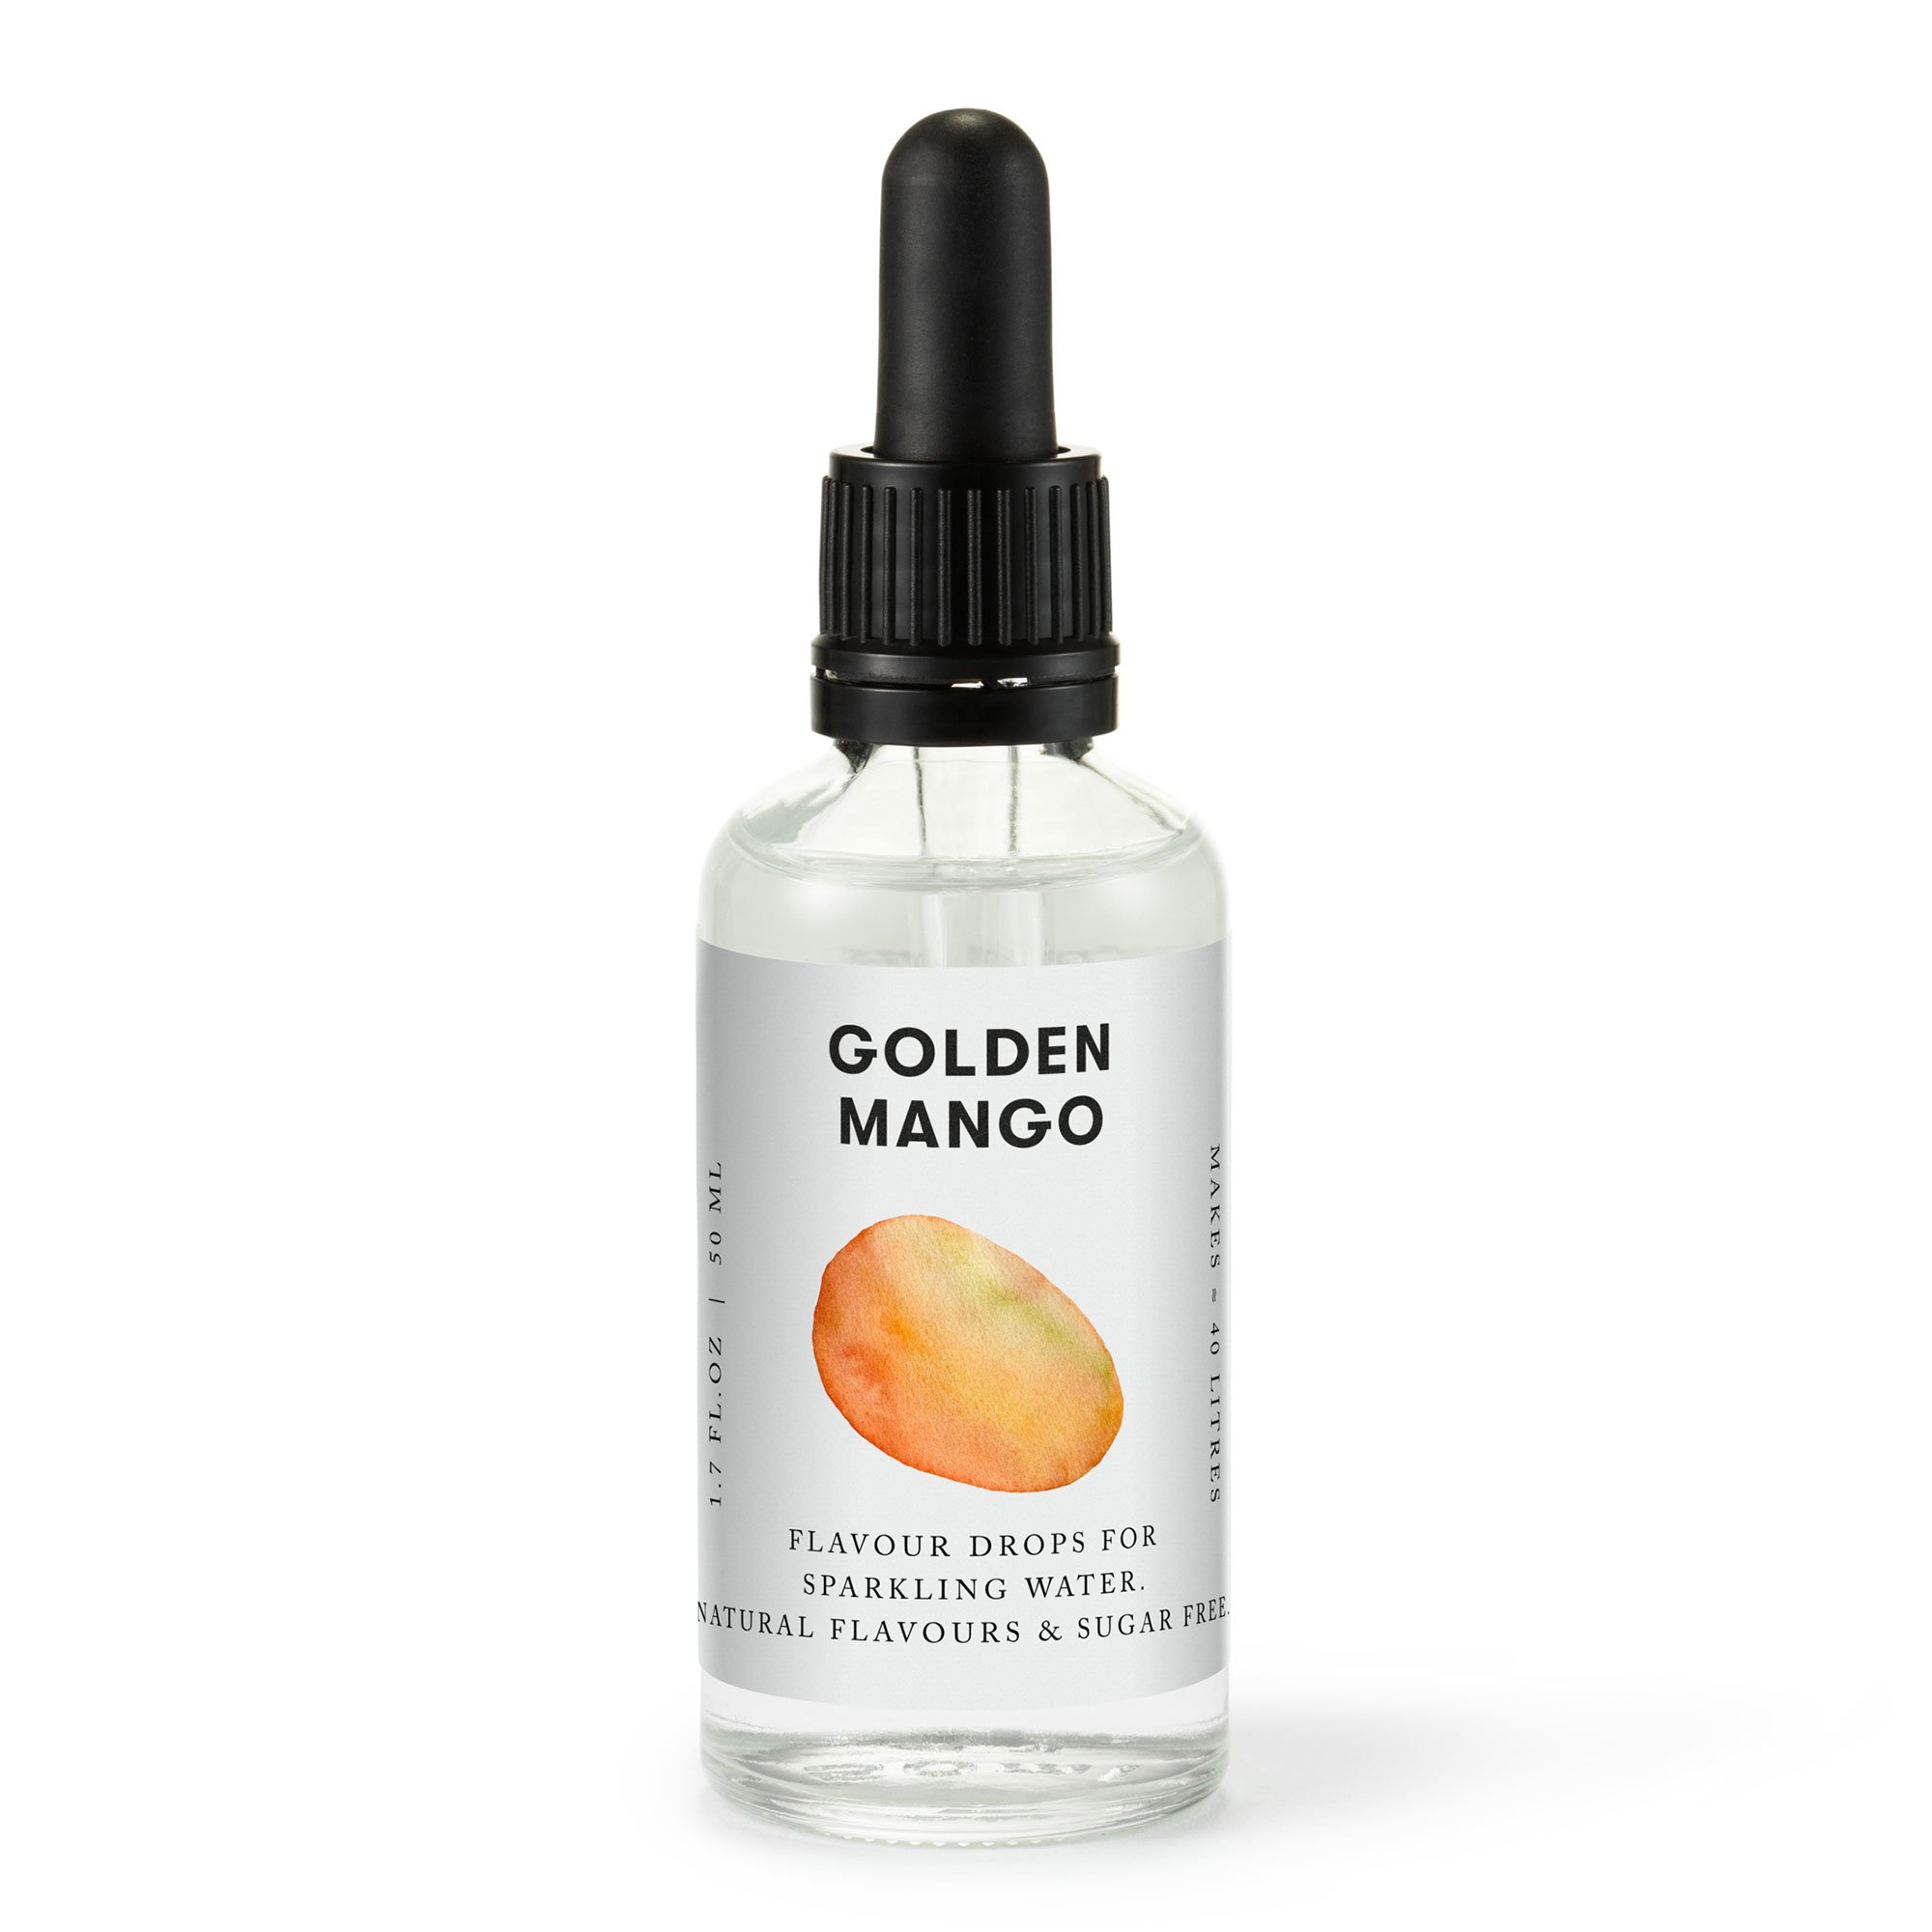 Aarke Flavour drops golden mango